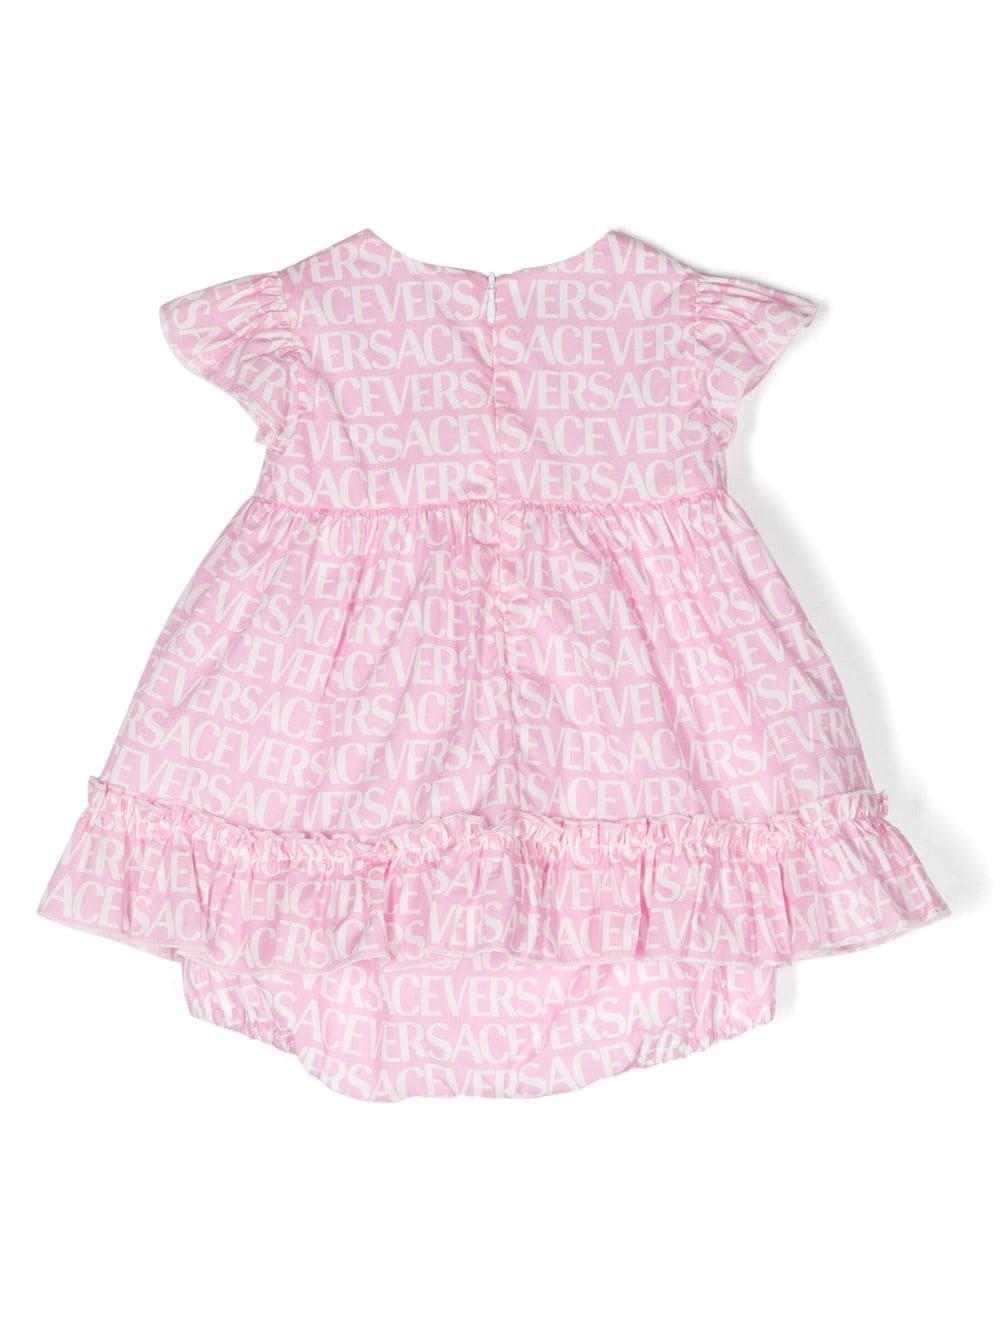 Versace Kids logo-print cotton dress set - Pink